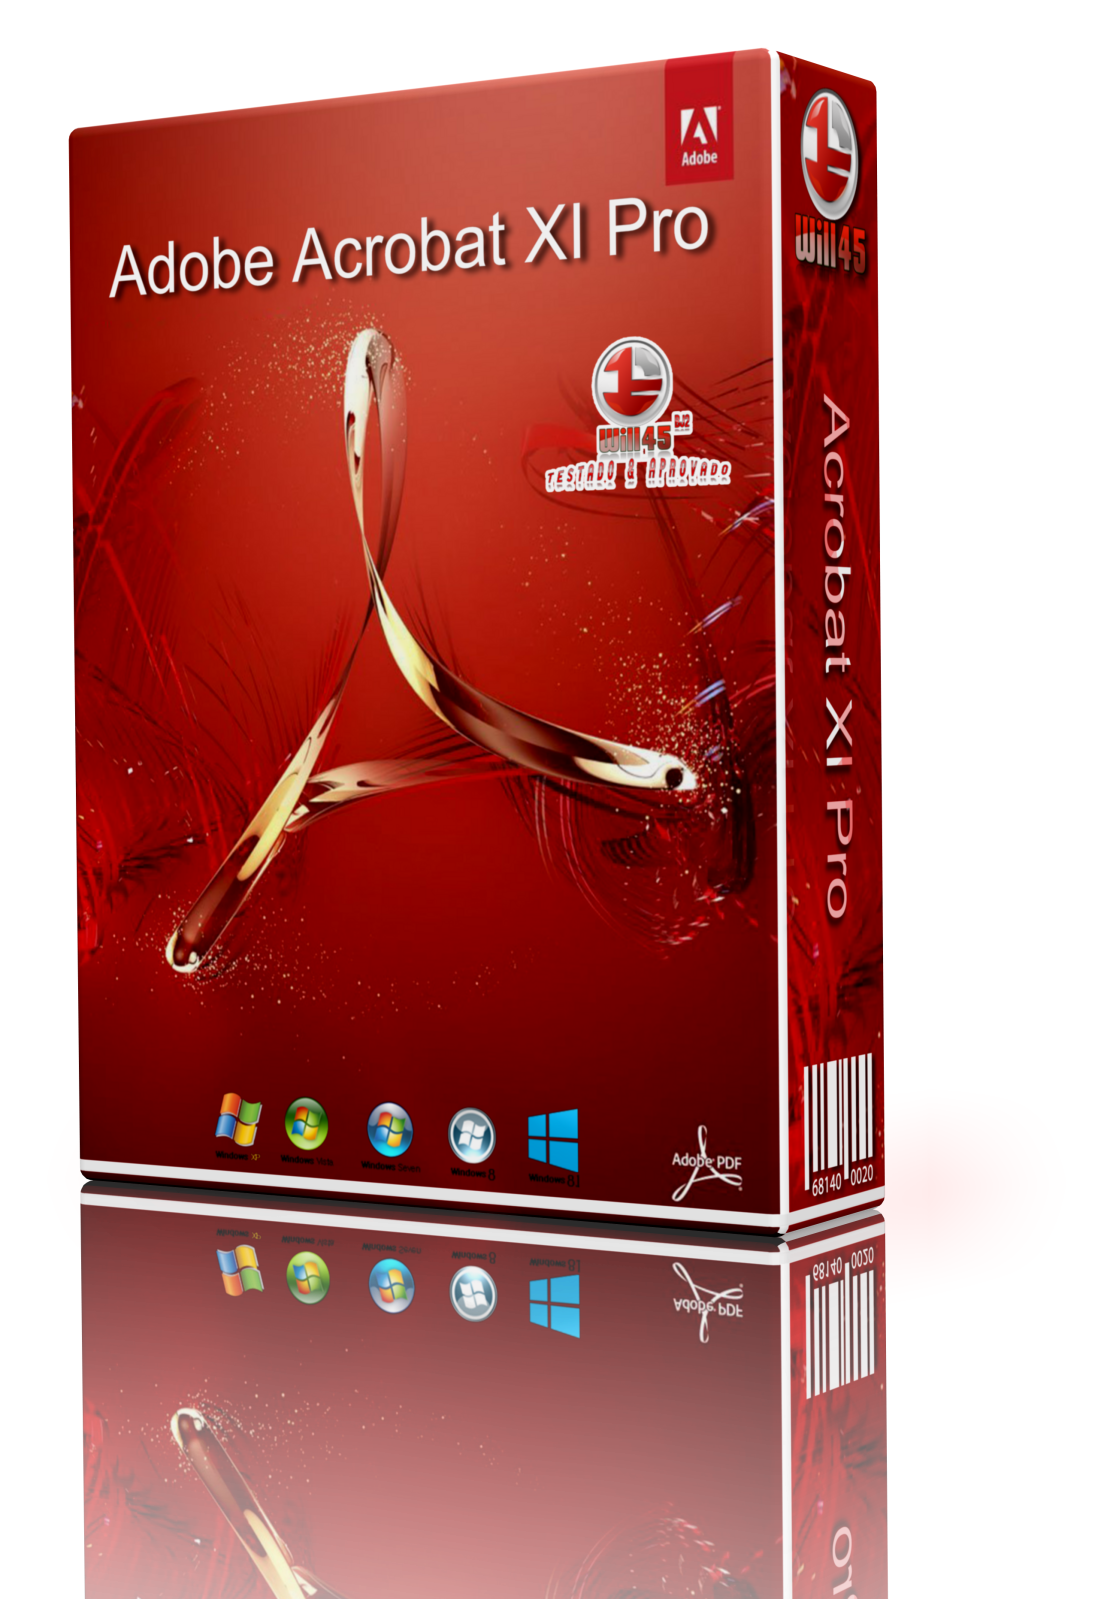 acrobat xi pro free download with crack